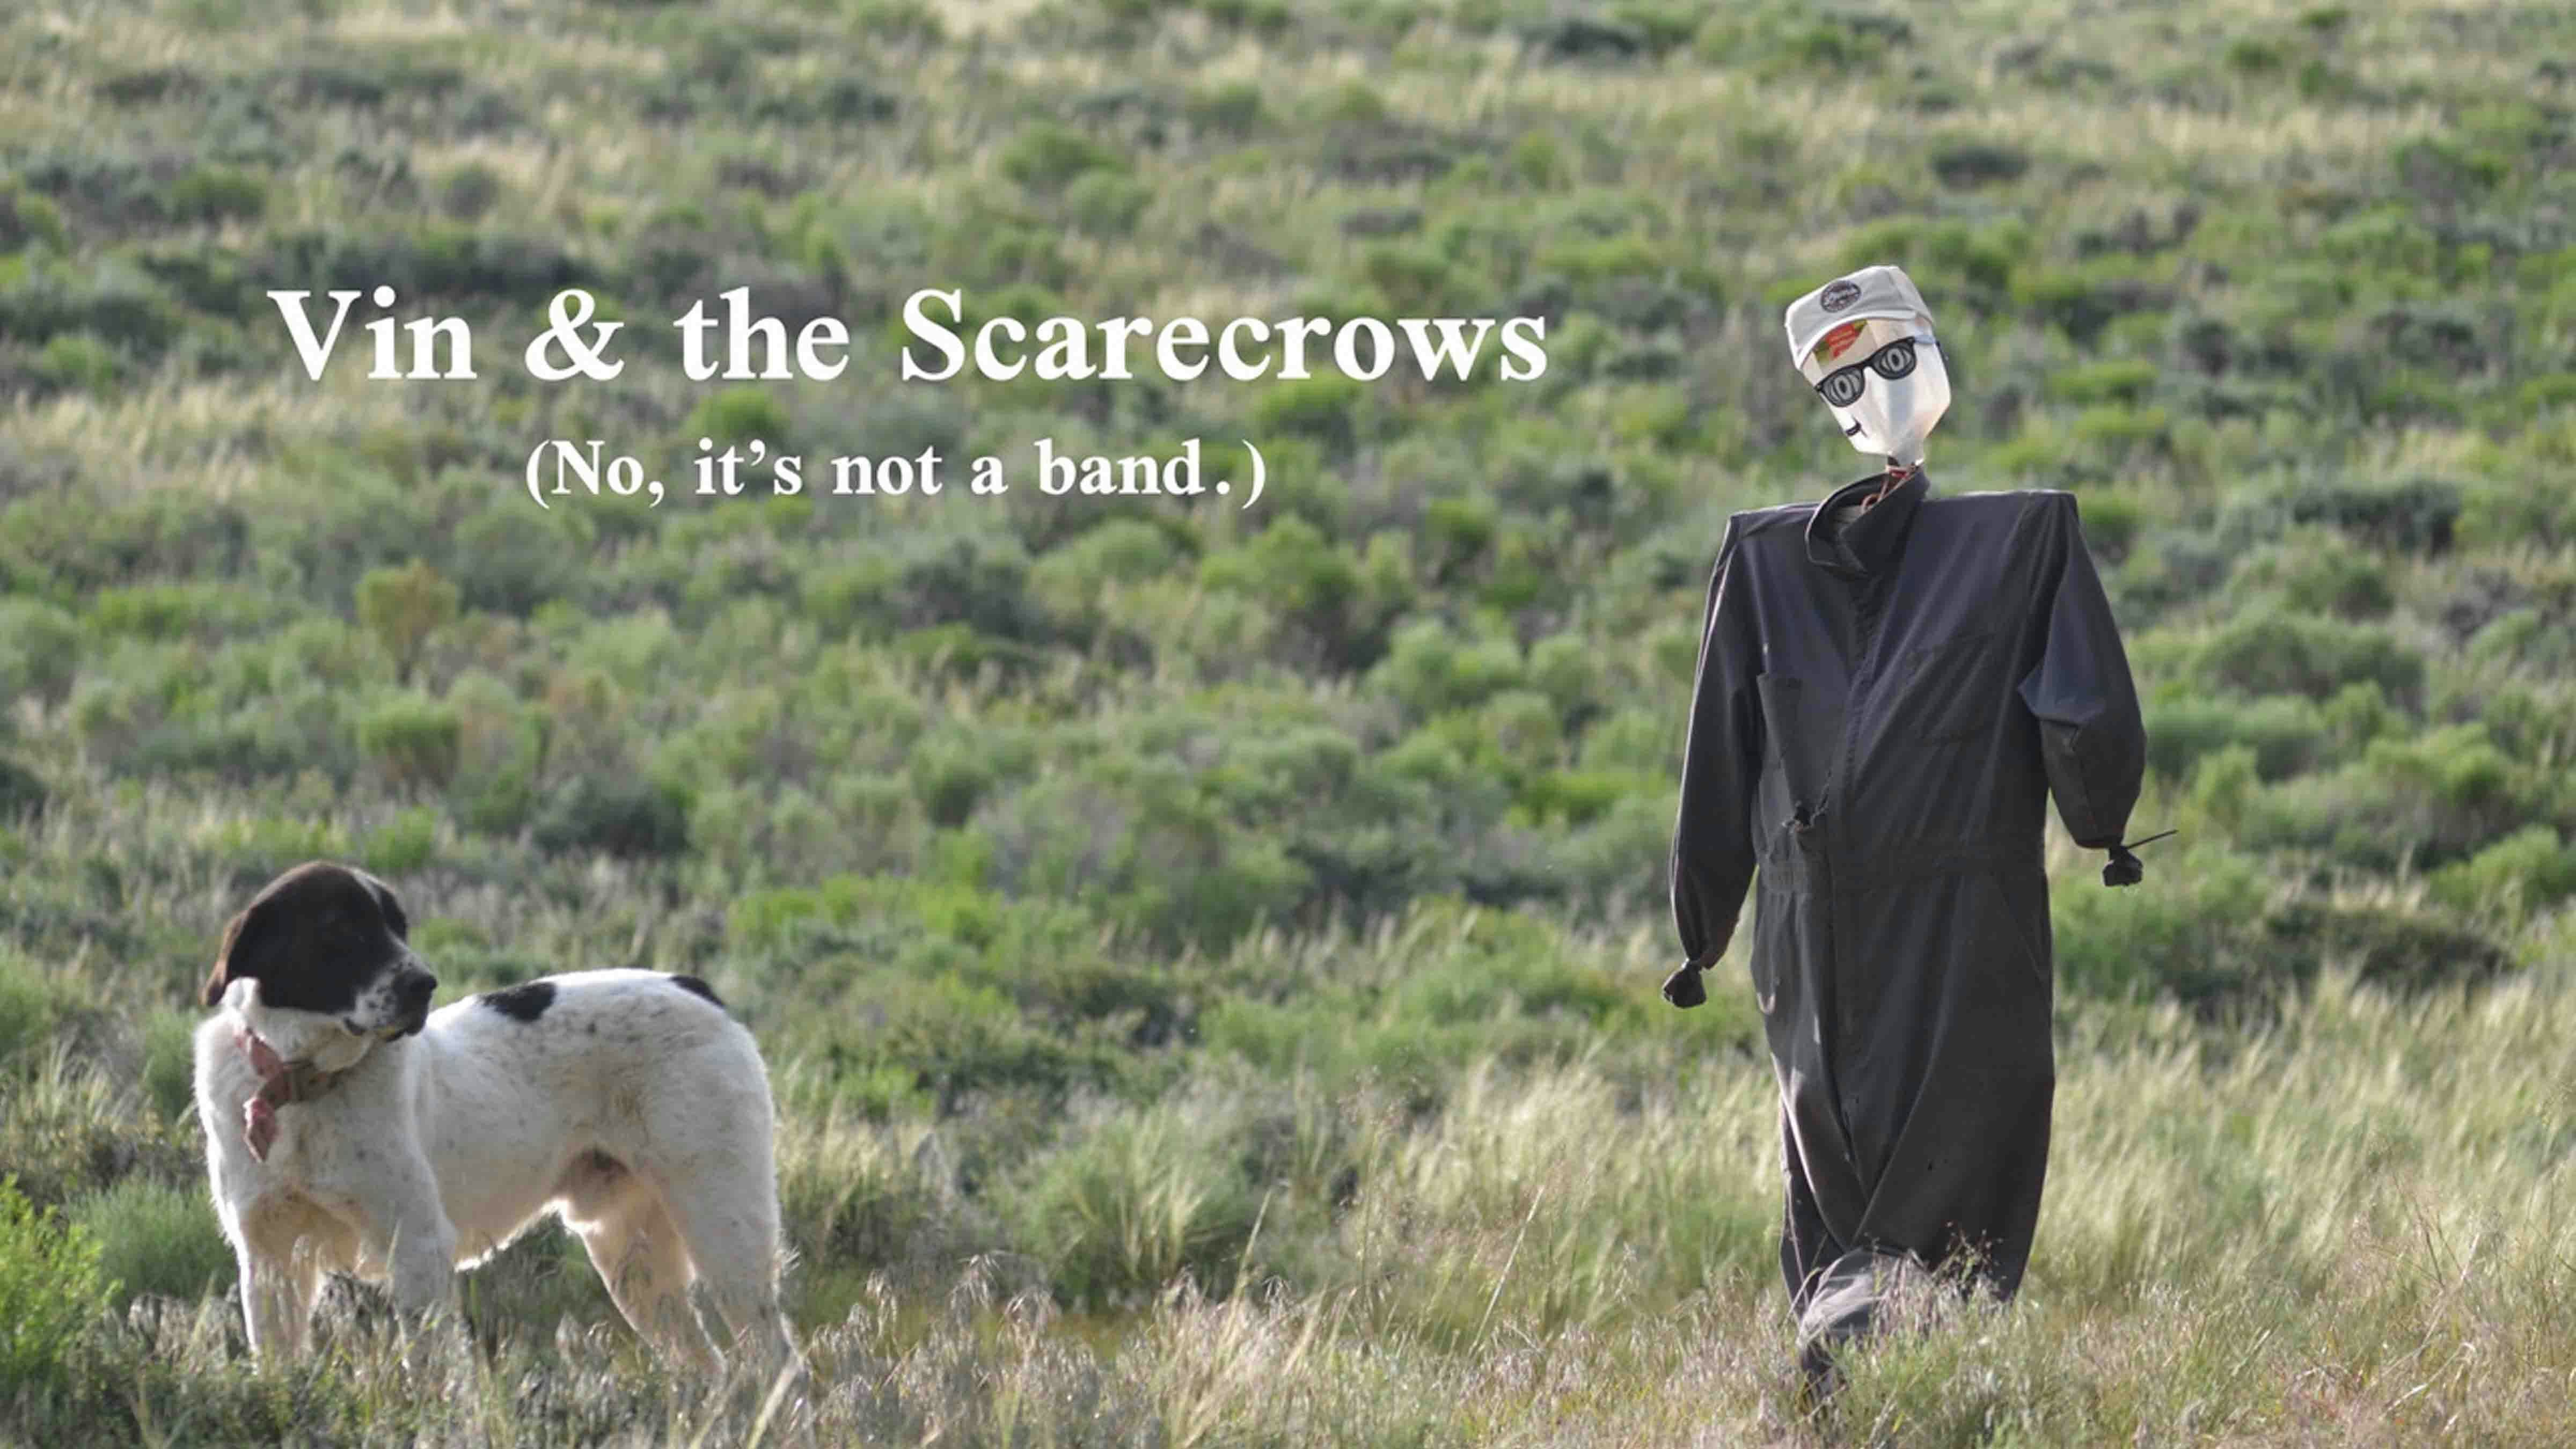 Vin scarecrows 2 6 27 23